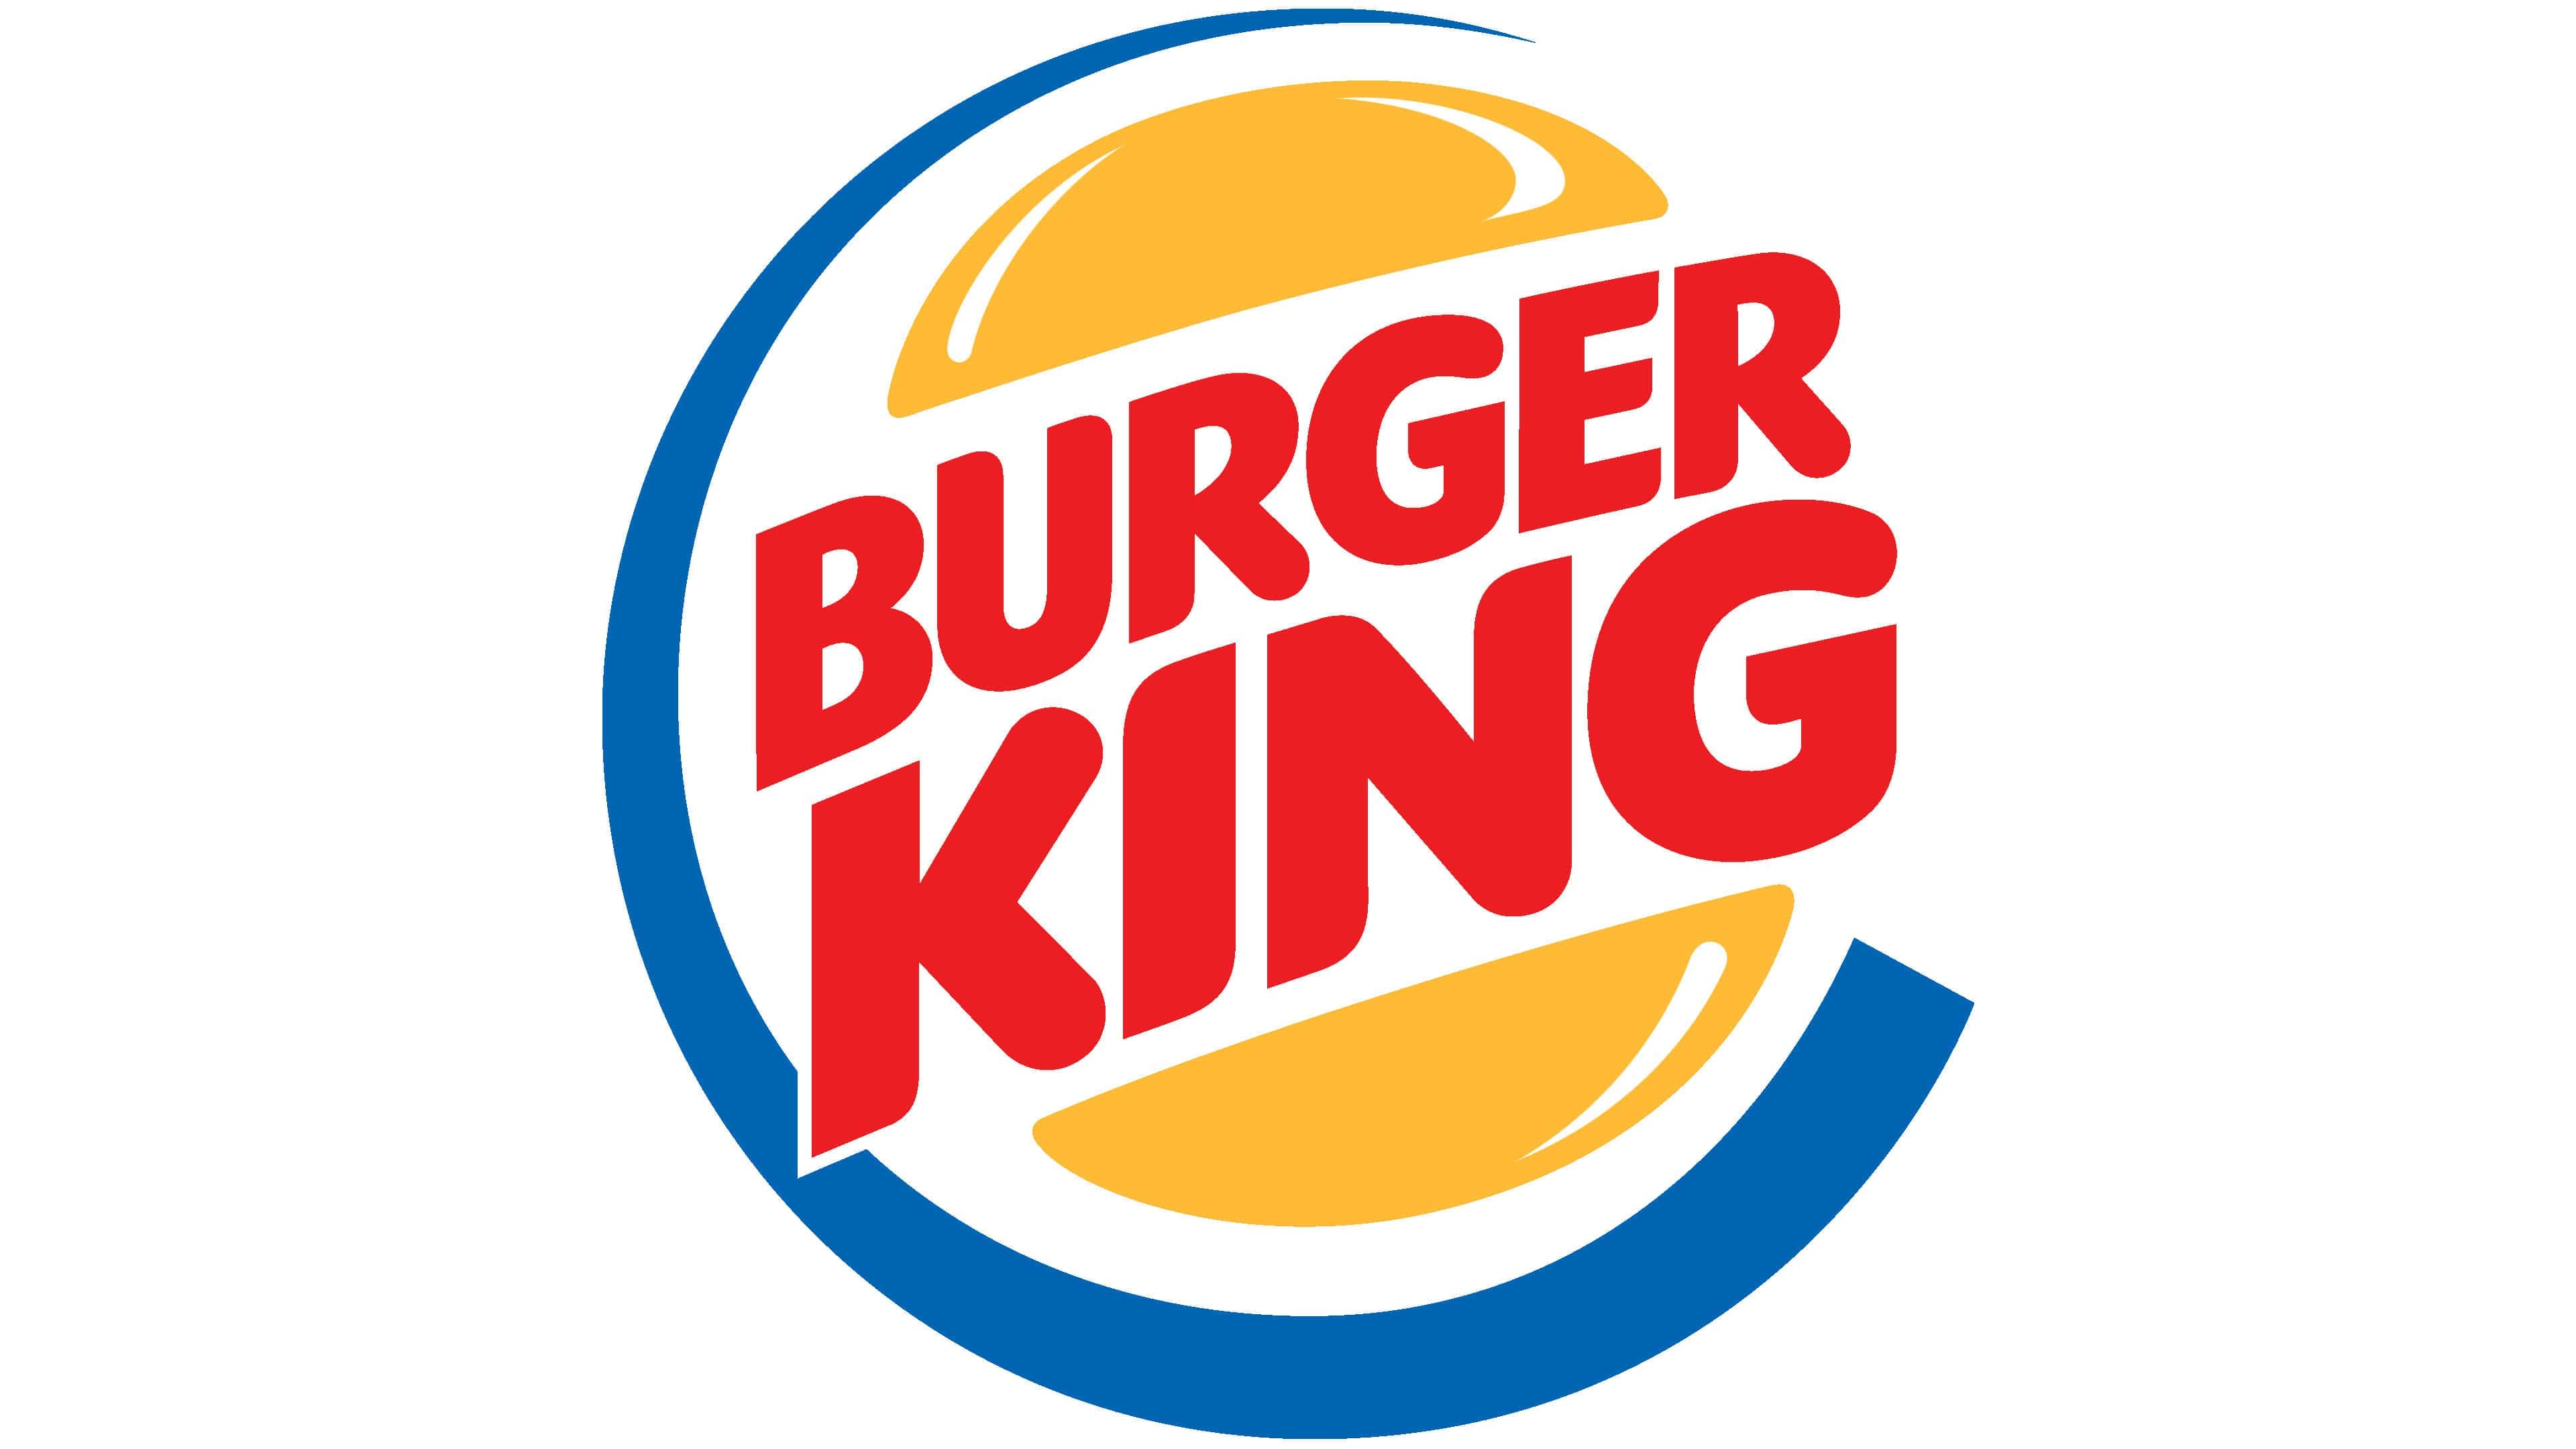 Burger King logo and symbol, meaning, history, PNG